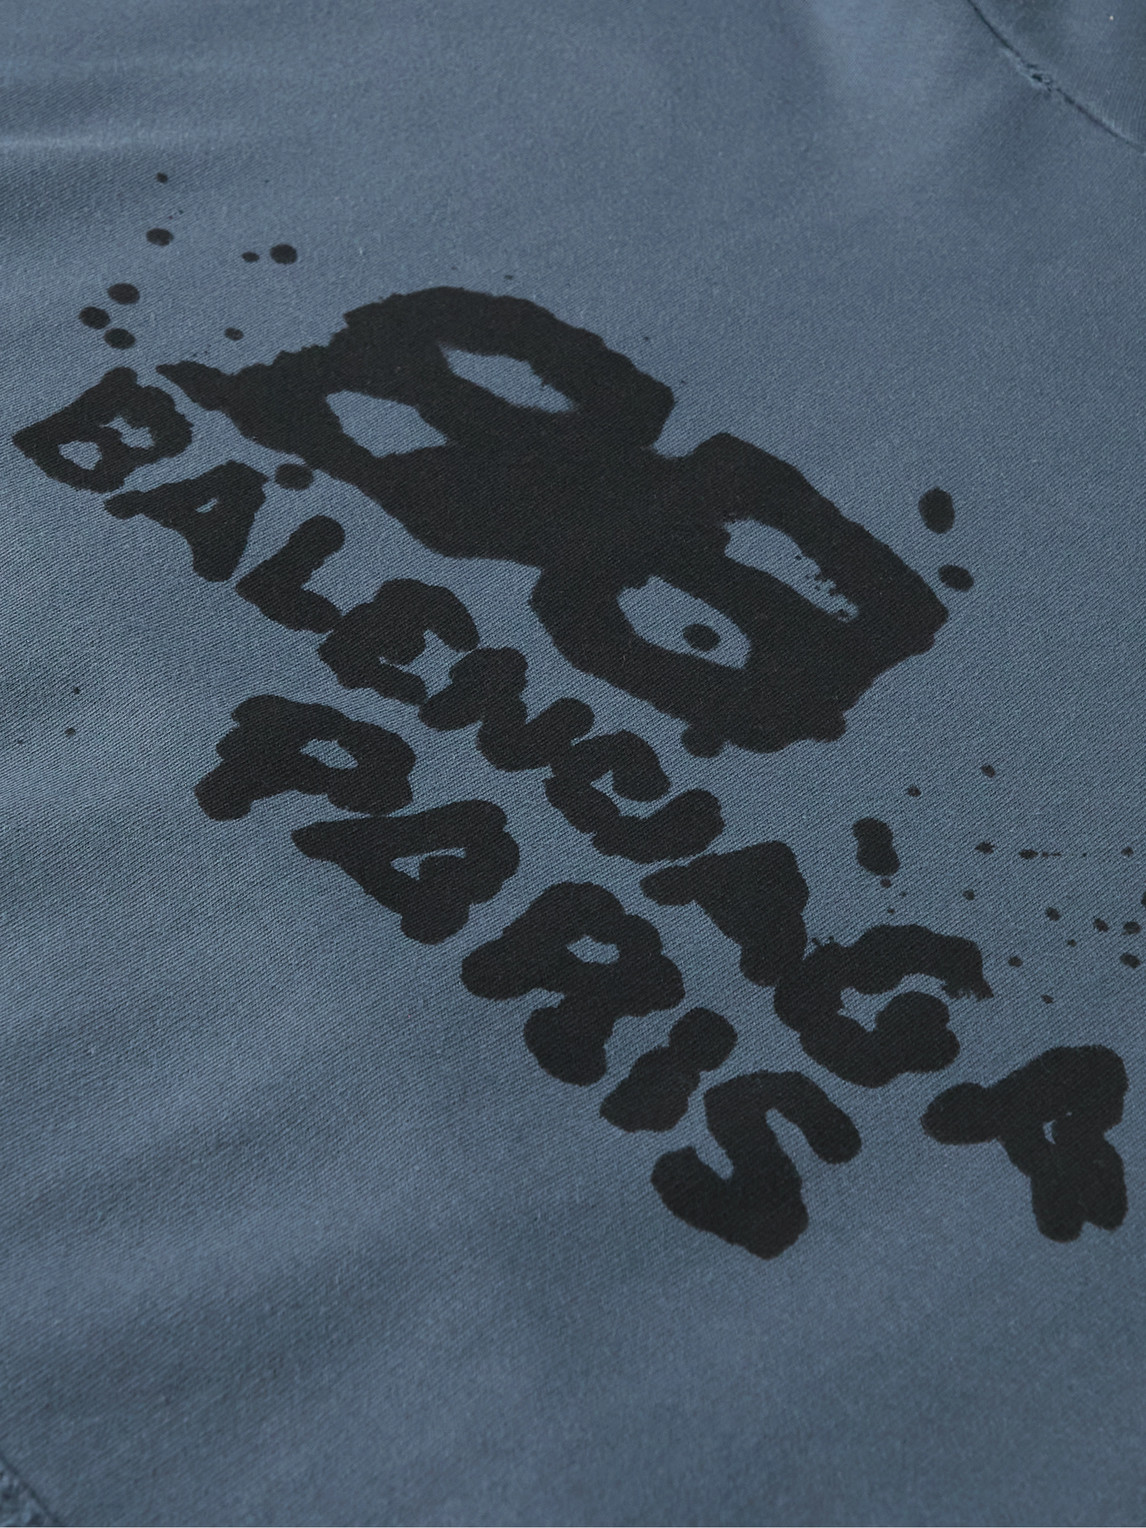 Balenciaga - Oversized Distressed Logo-Print Cotton-Jersey Hoodie